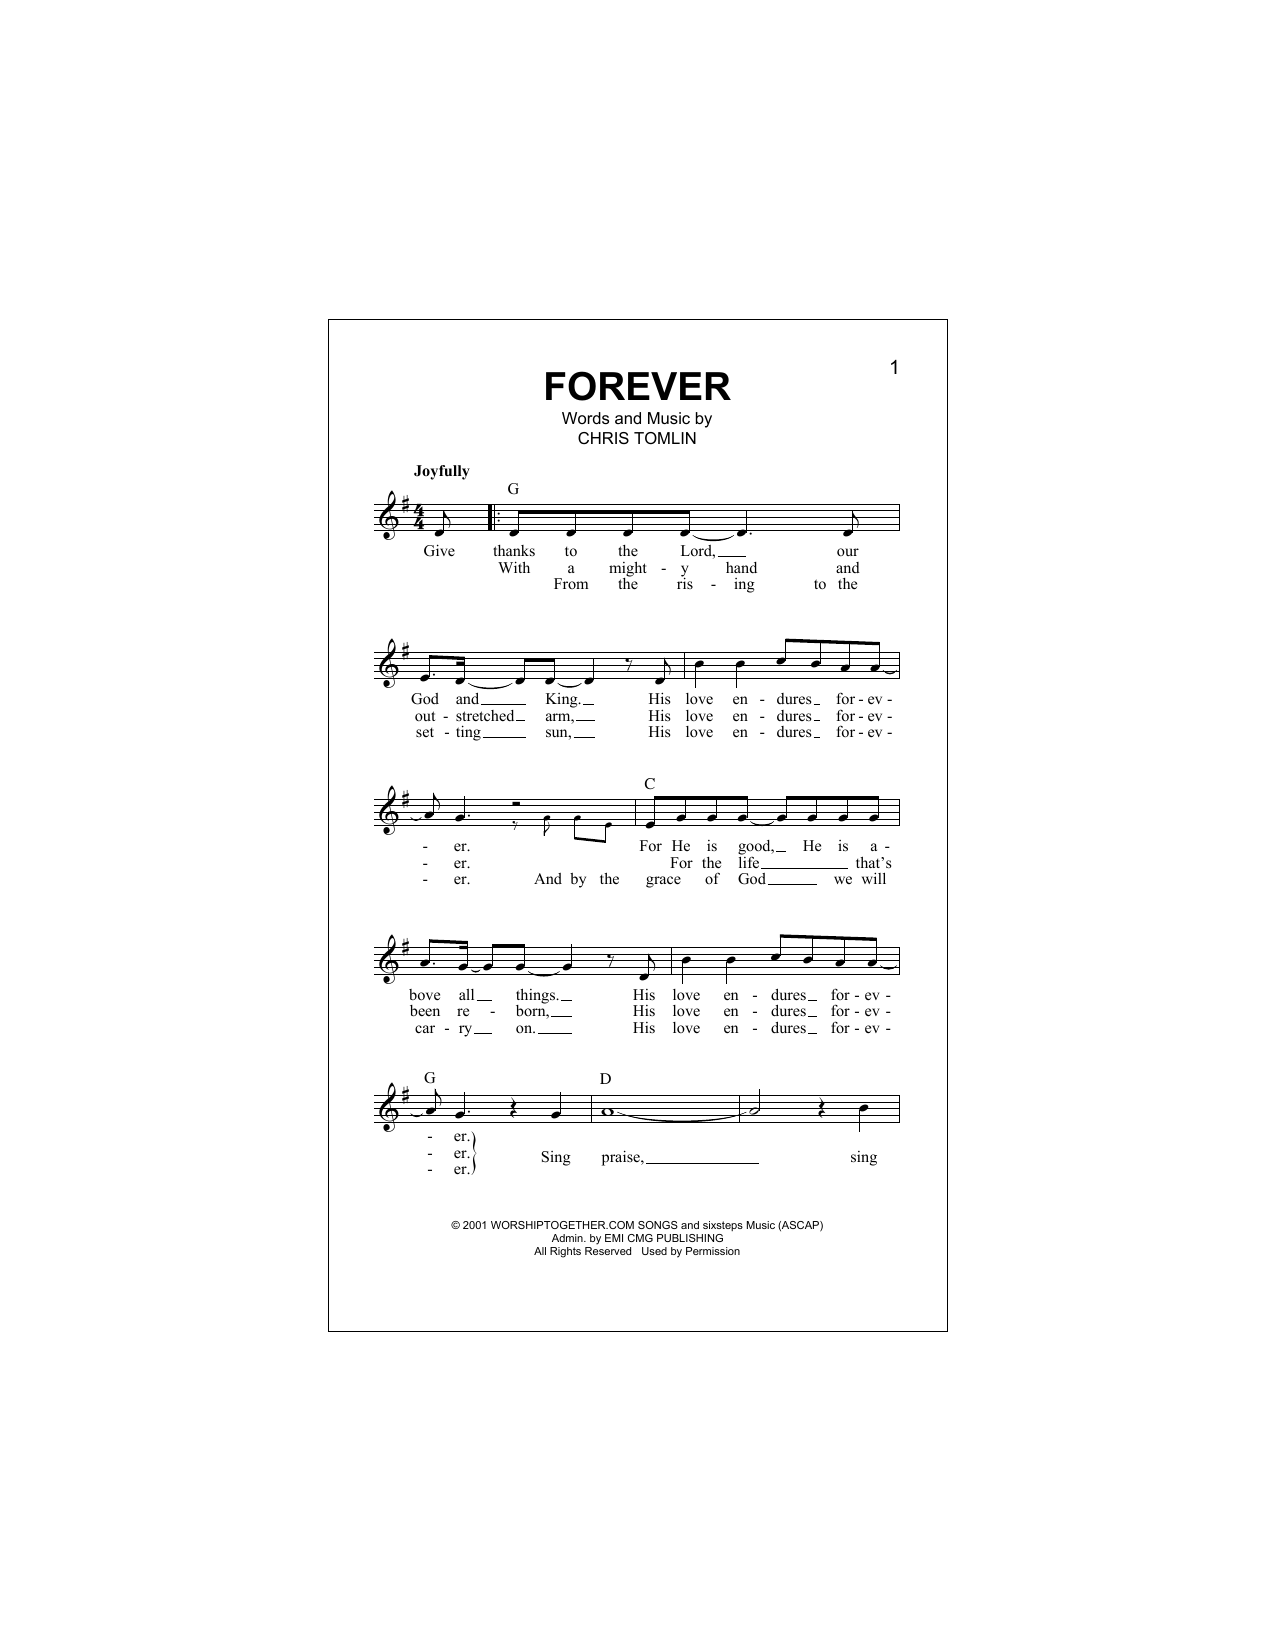 Download Chris Tomlin Forever Sheet Music